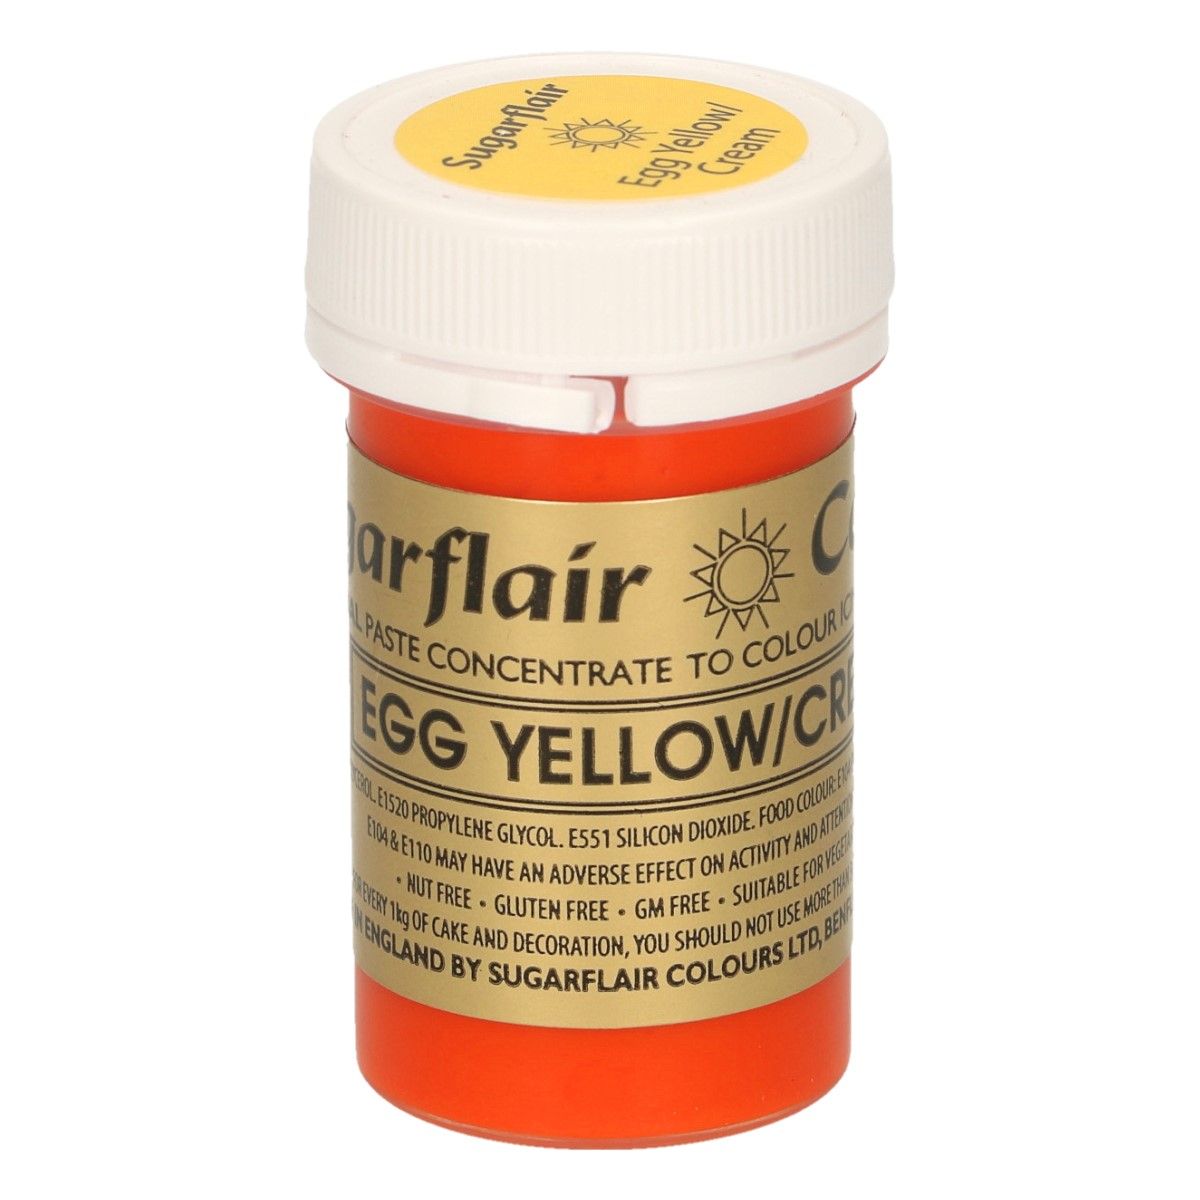 Pastenfarbe Egg Yellow-Eigelb 25g